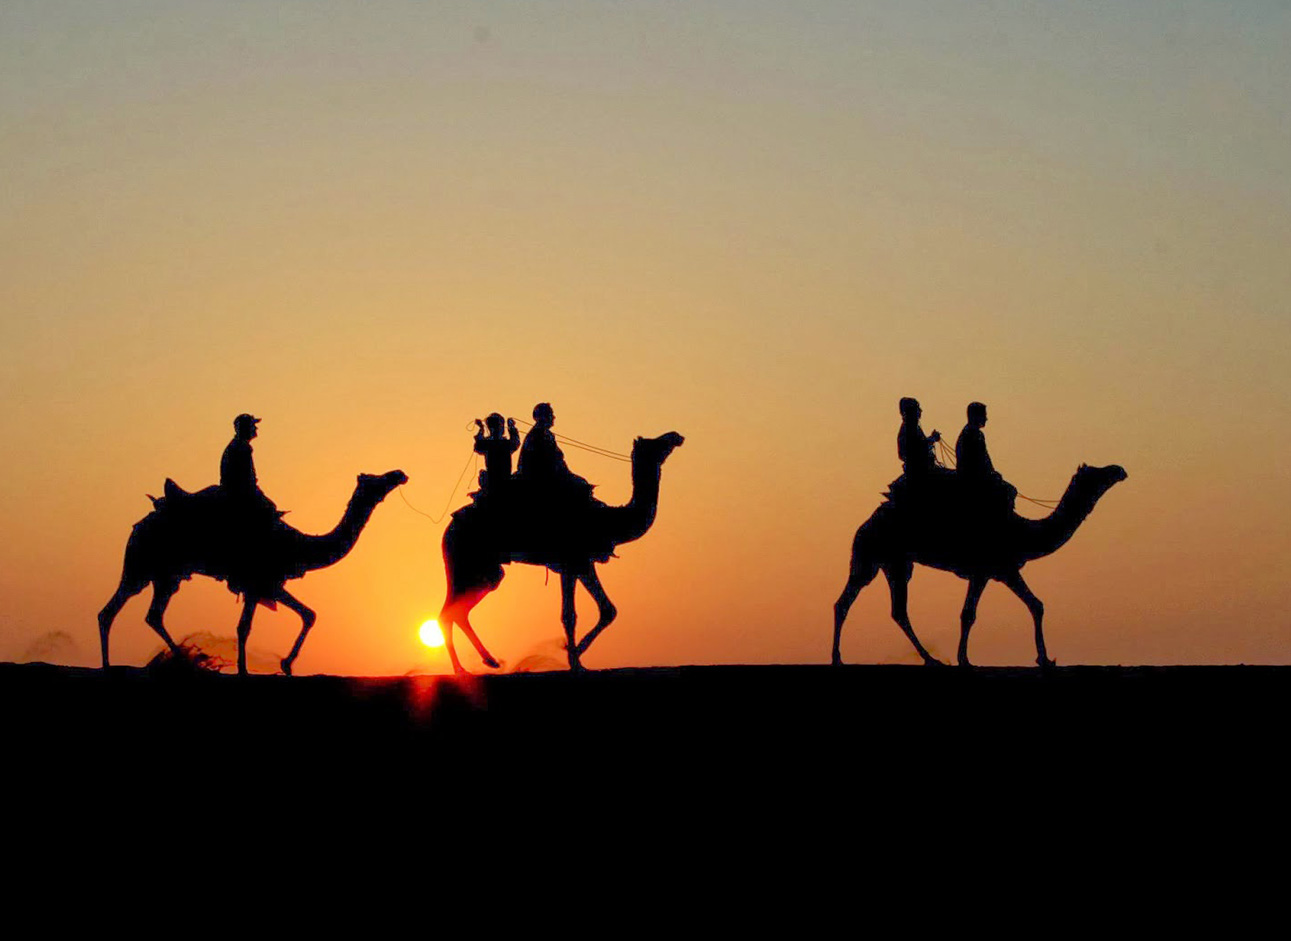 Camel Ride - Experience desert landscapes on camelback